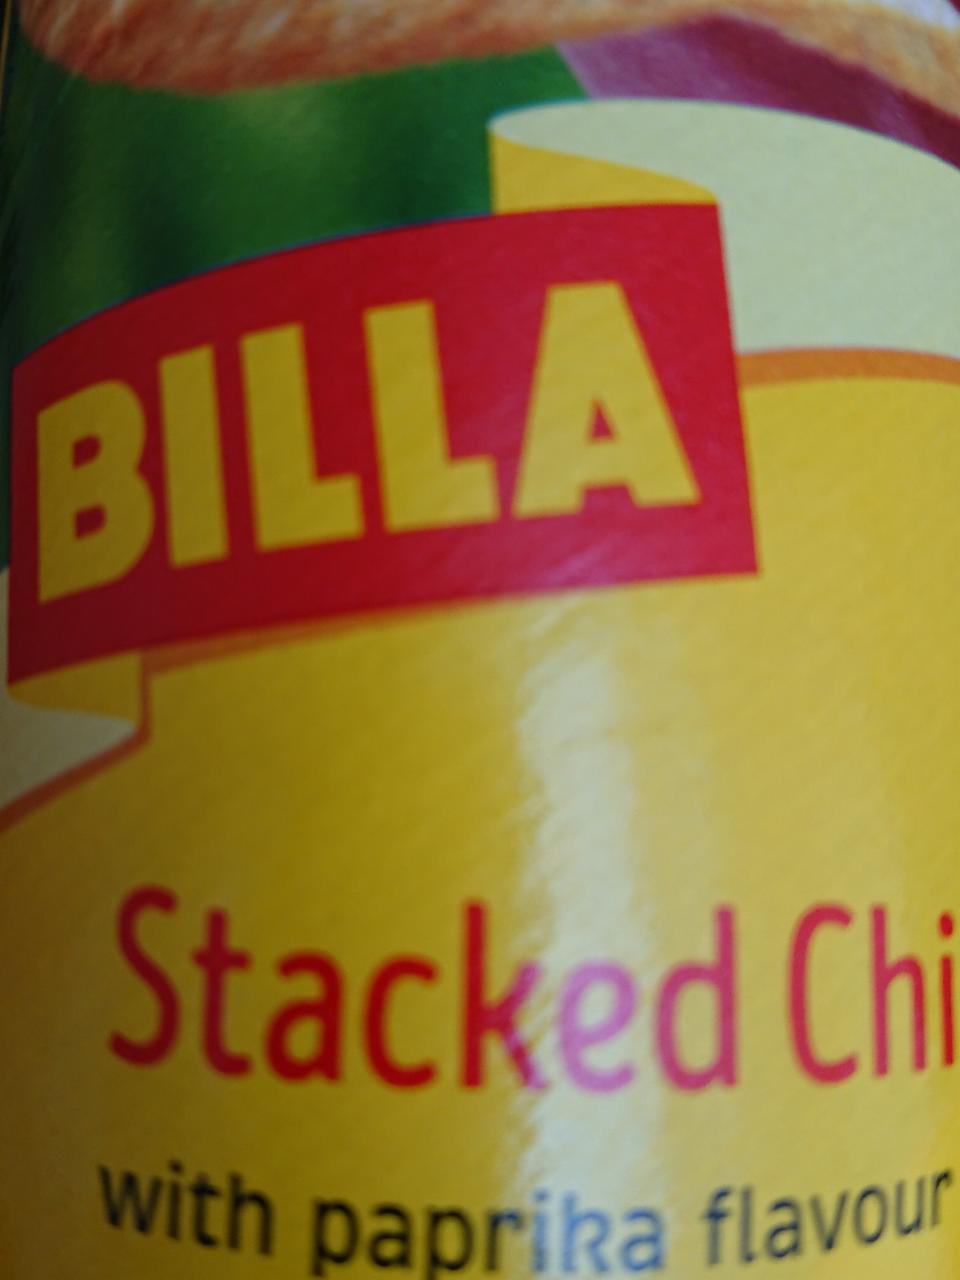 Fotografie - Stacked Chips paprika - Billa